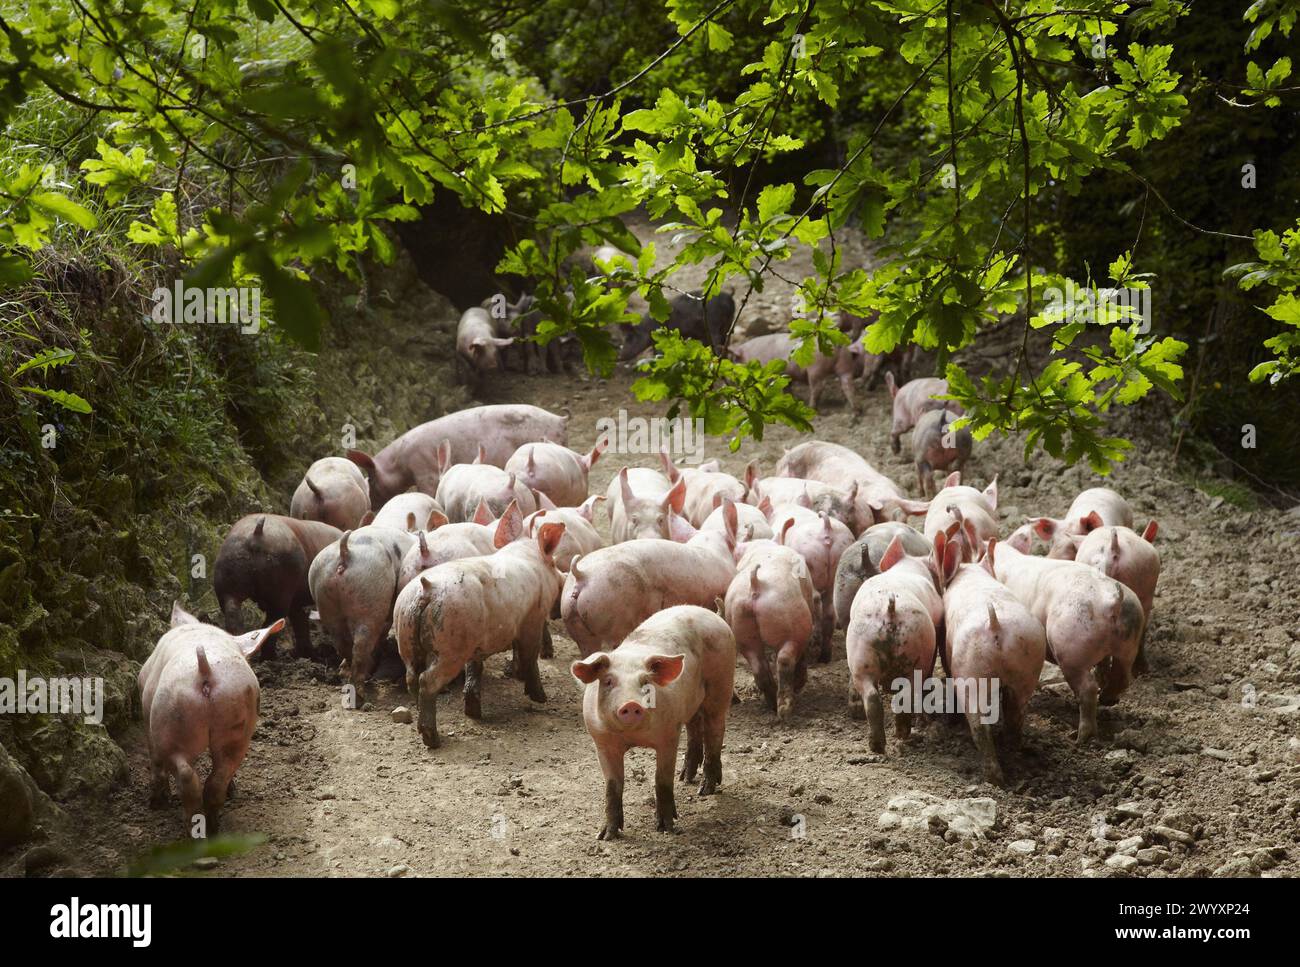 Pigs, Beizama, Guipuzcoa, Basque Country, Spain. Stock Photo